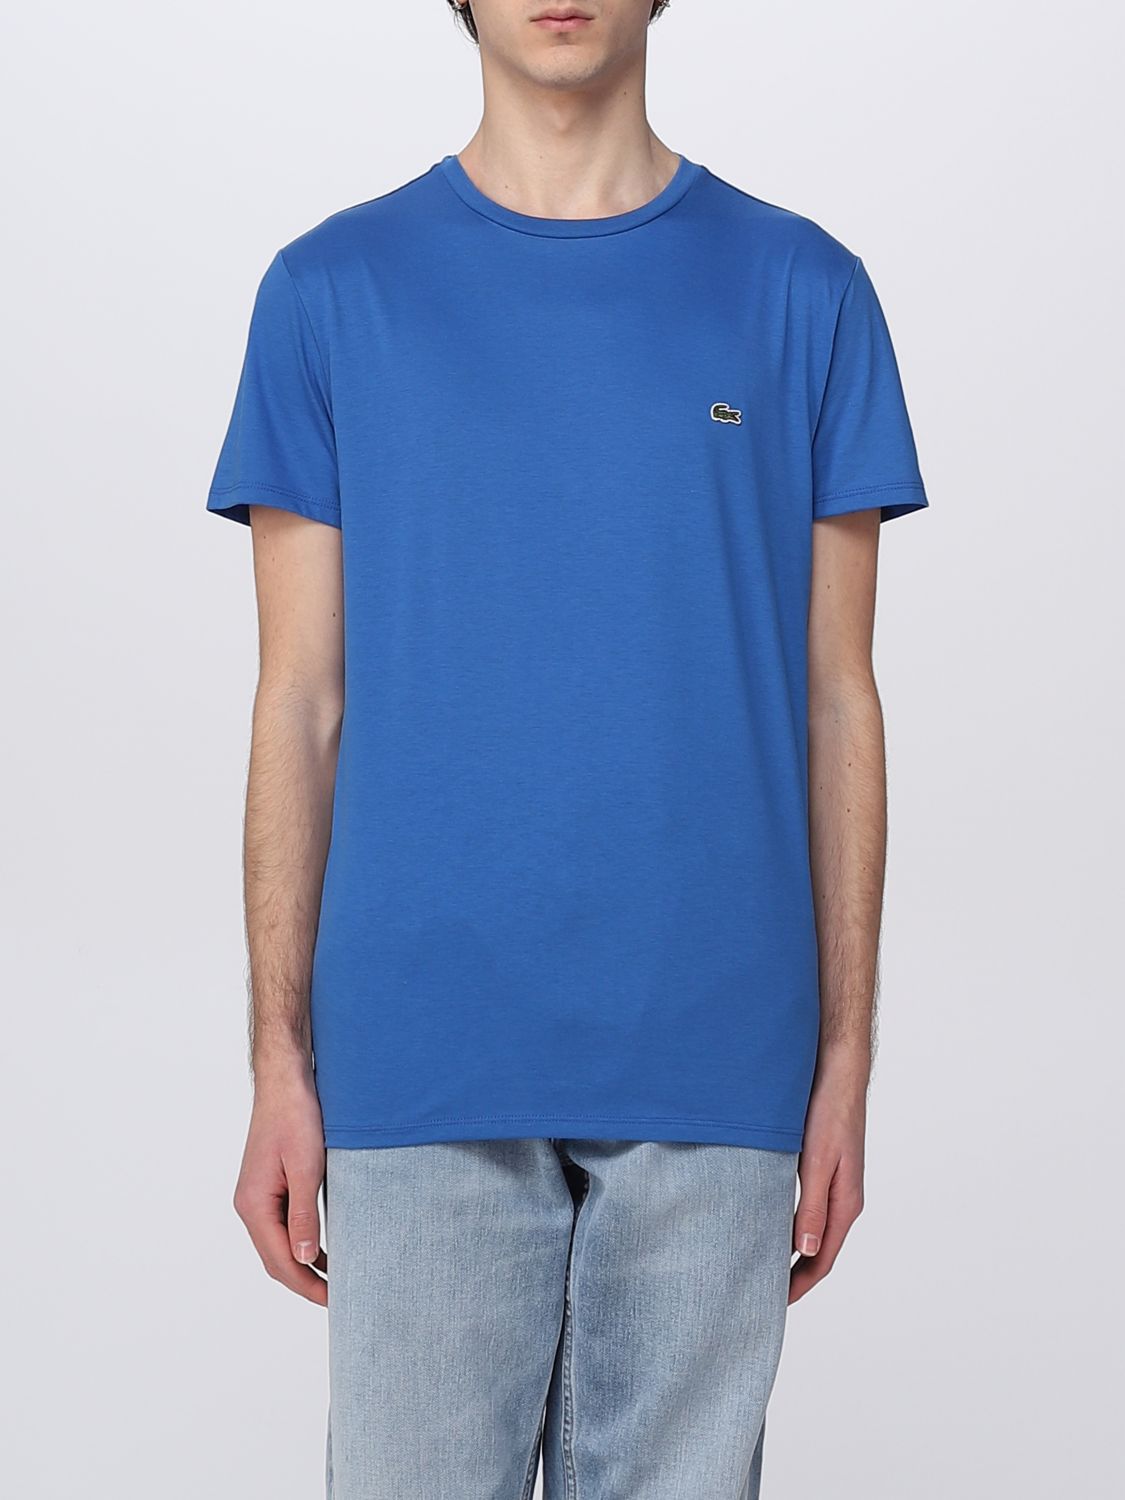 Publiciteit Is Verkleuren LACOSTE: t-shirt for man - Royal Blue | Lacoste t-shirt TH6709 online on  GIGLIO.COM